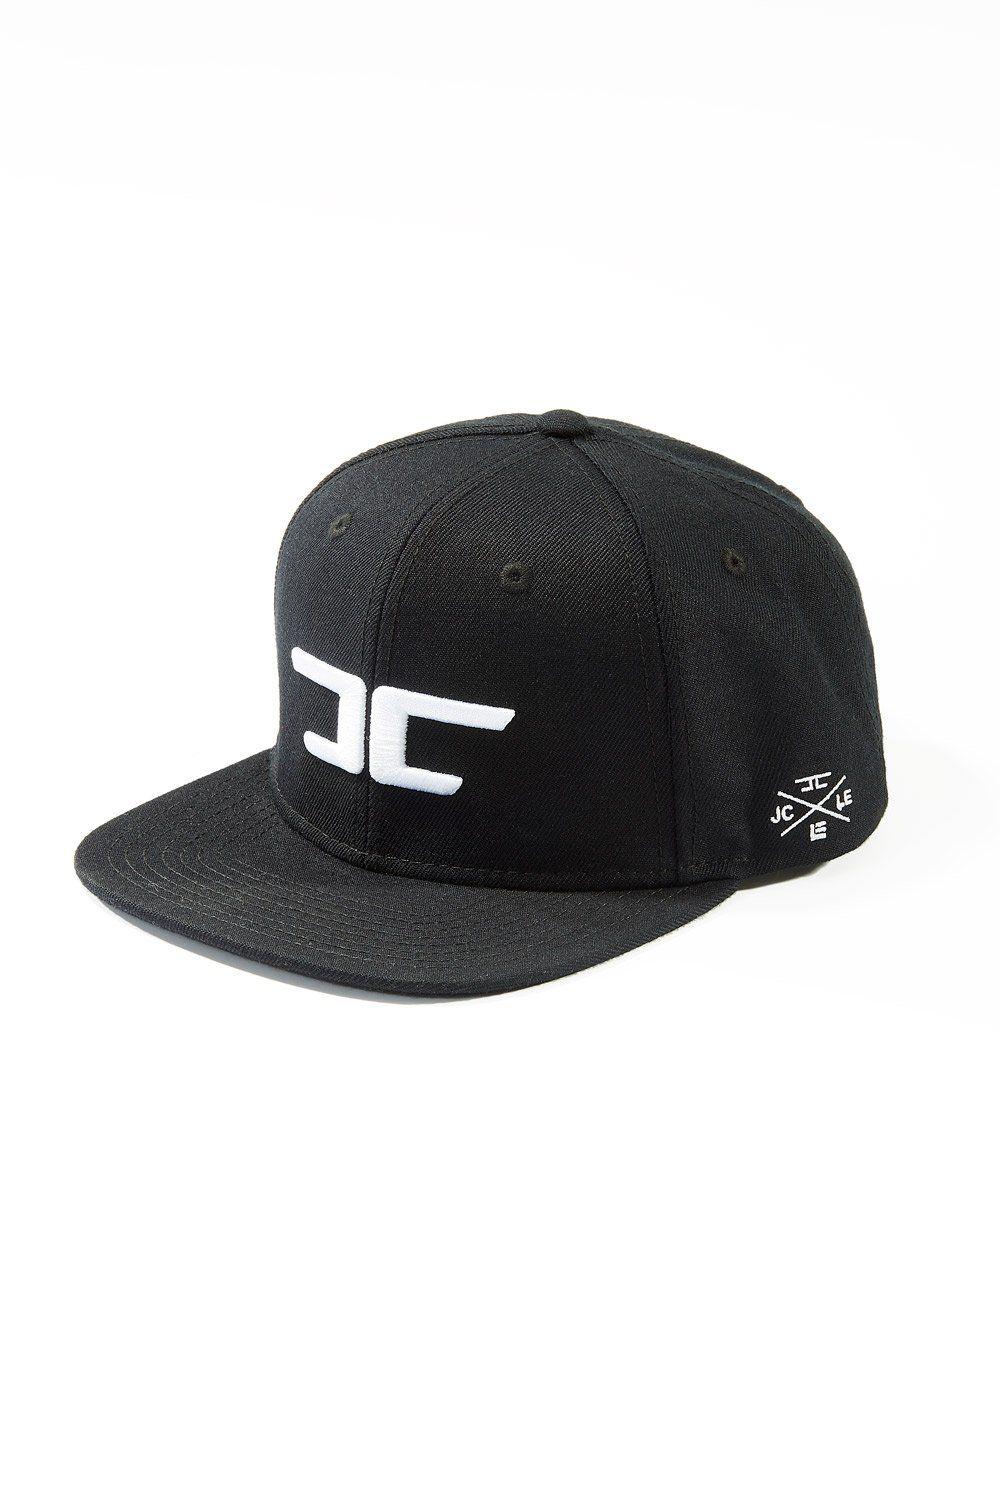 JC Logo - JC Logo Snapback Cap | fun | Logos, Snapback cap, Cap